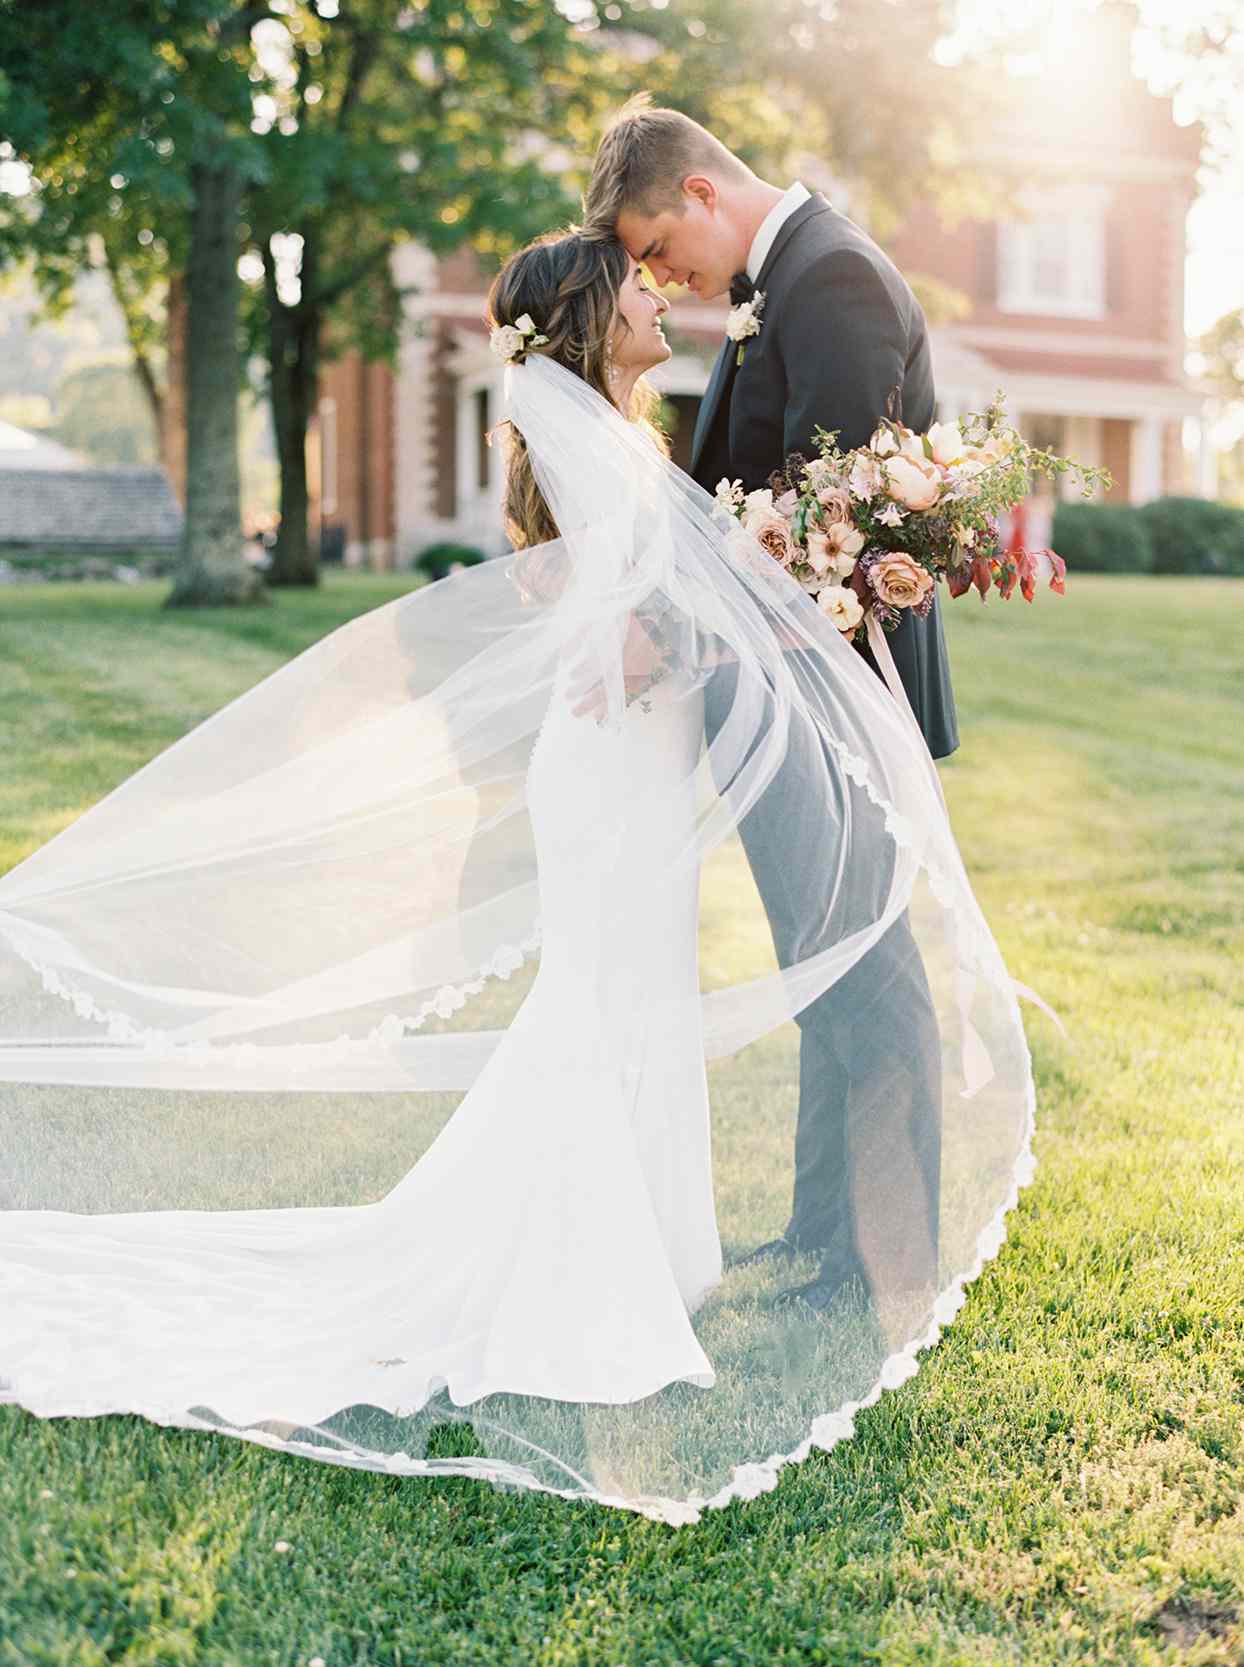 julia doug wedding couple veil blowing in wind